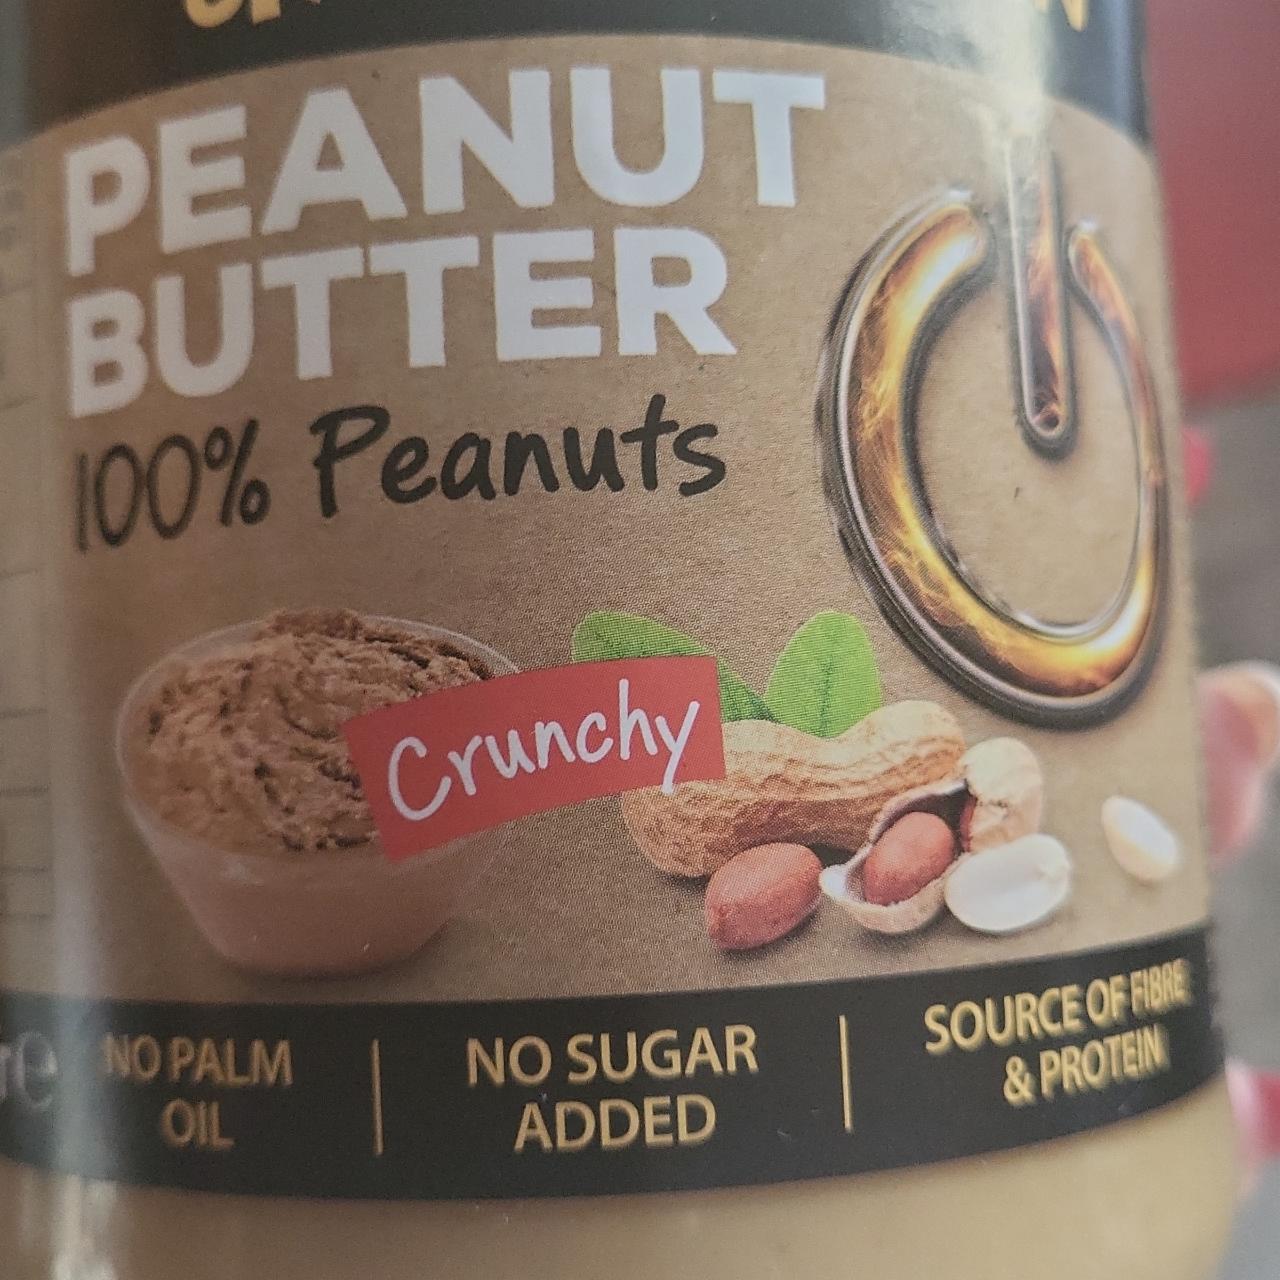 Fotografie - Peanut butter crunchy 100% peanuts GO ON